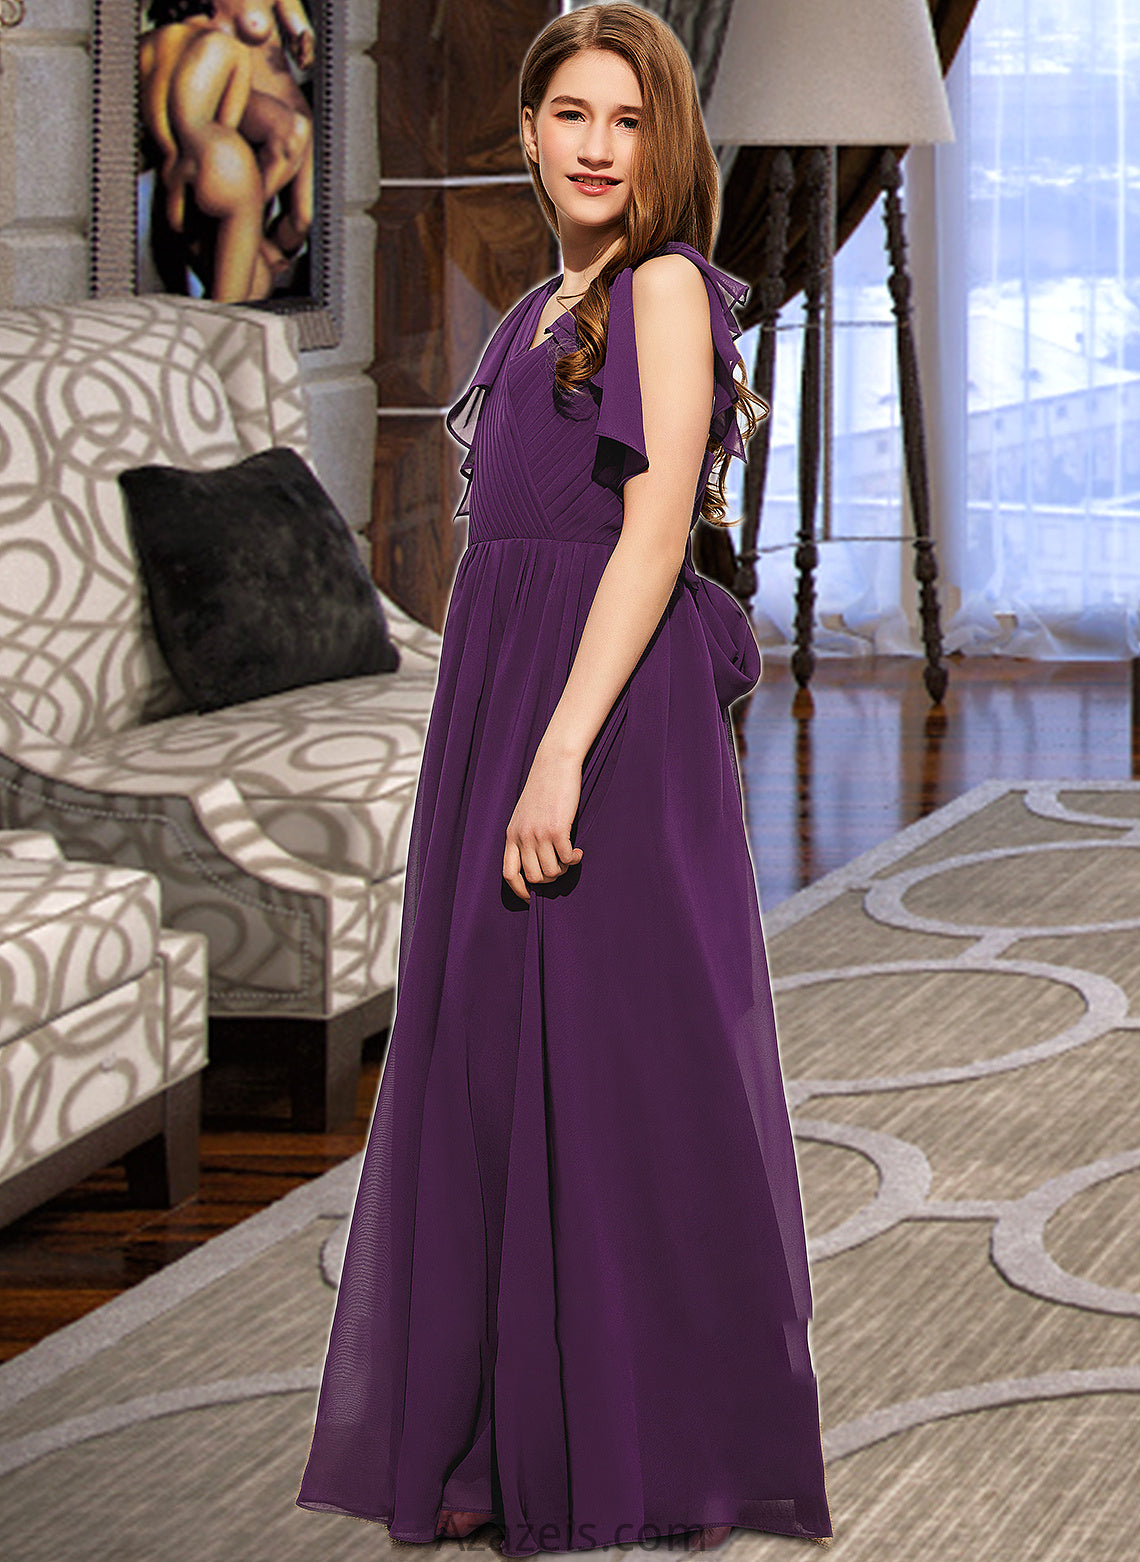 Allie A-Line V-neck Floor-Length Chiffon Junior Bridesmaid Dress With Bow(s) Cascading Ruffles DFP0013639